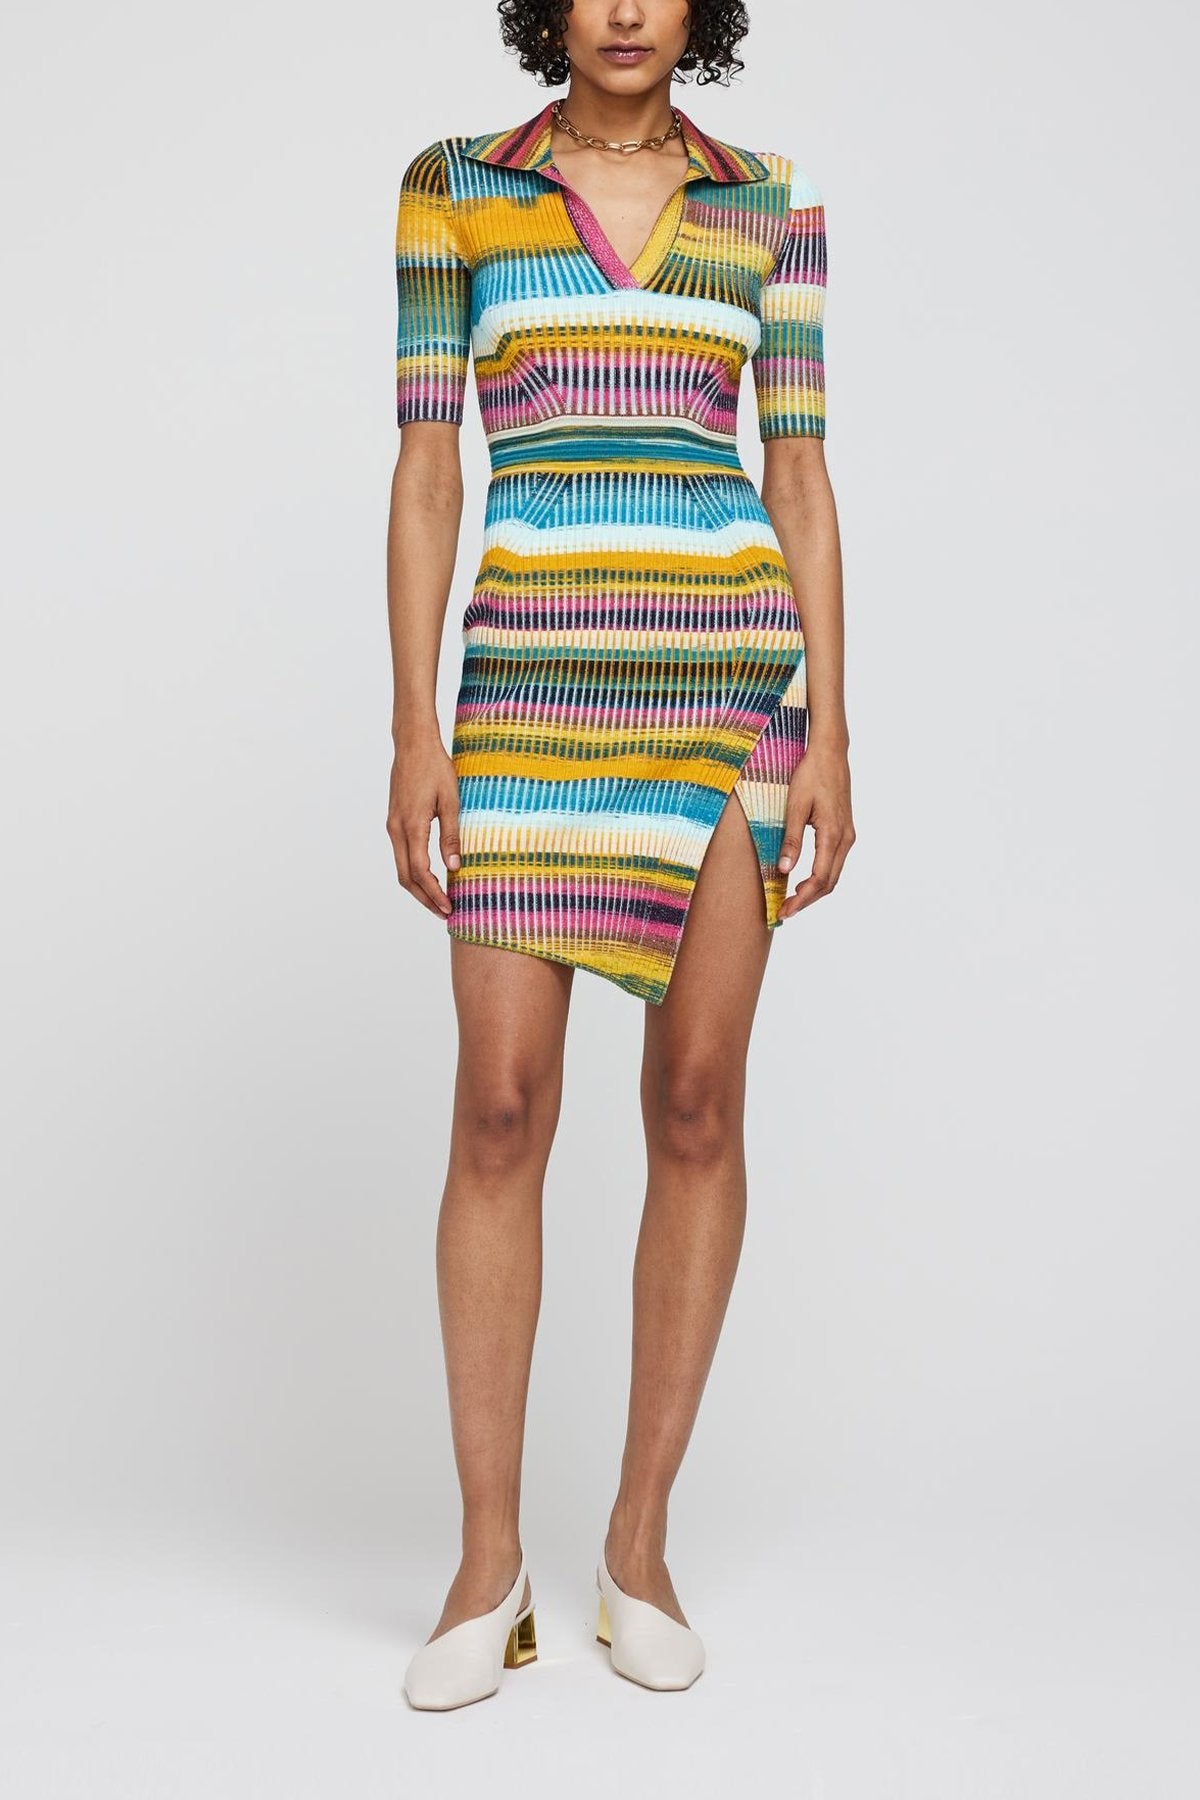 Solana Polo Mini Dress in Sunset Space Dye - shop-olivia.com